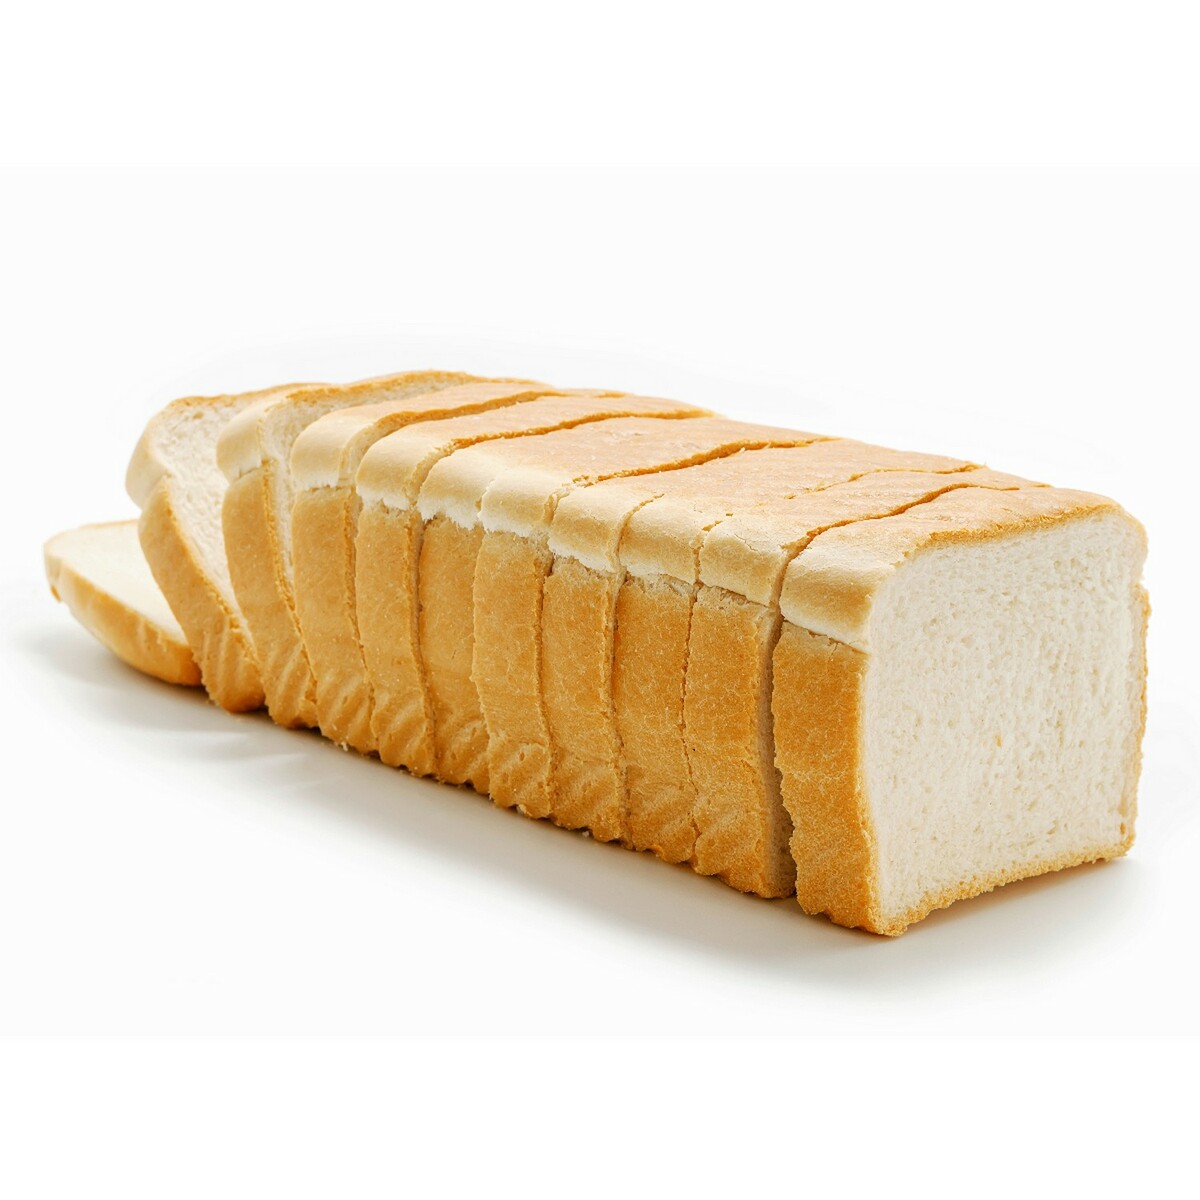 Elite Bread Milk 'N' Sugar 400g